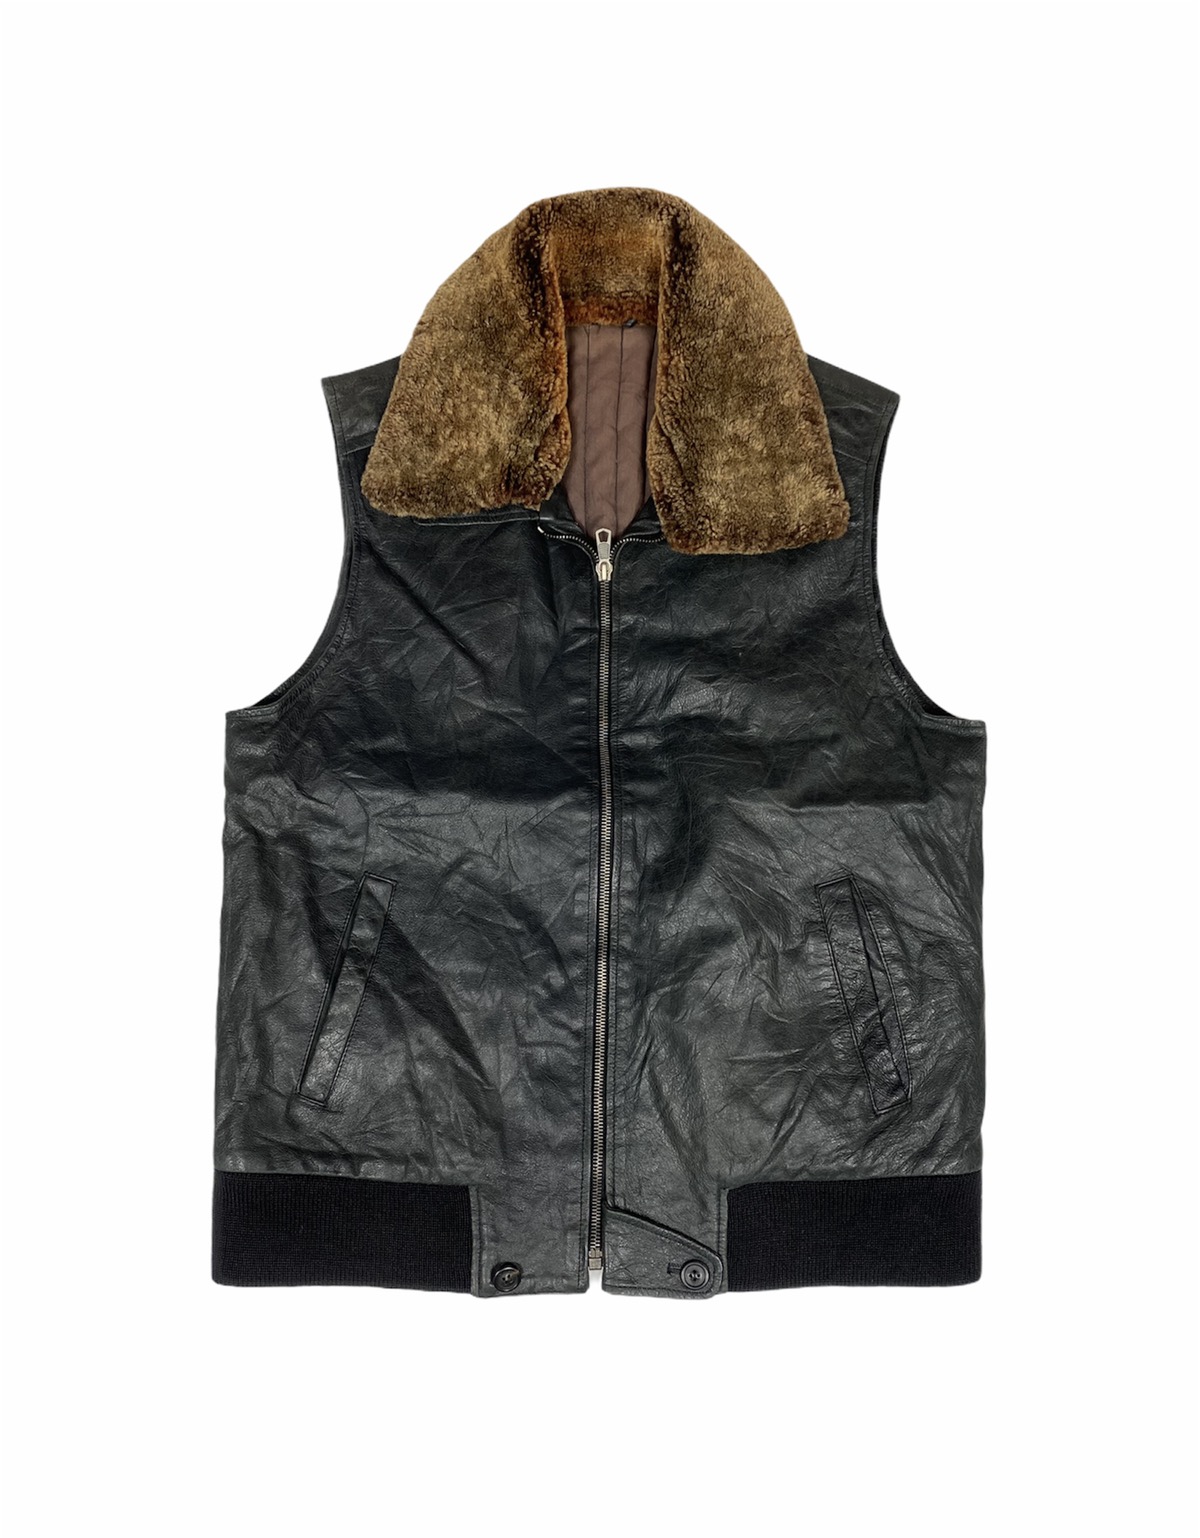 Maison Margiela A/W 2001-02 Leather Zipped Vest. J072 - 1